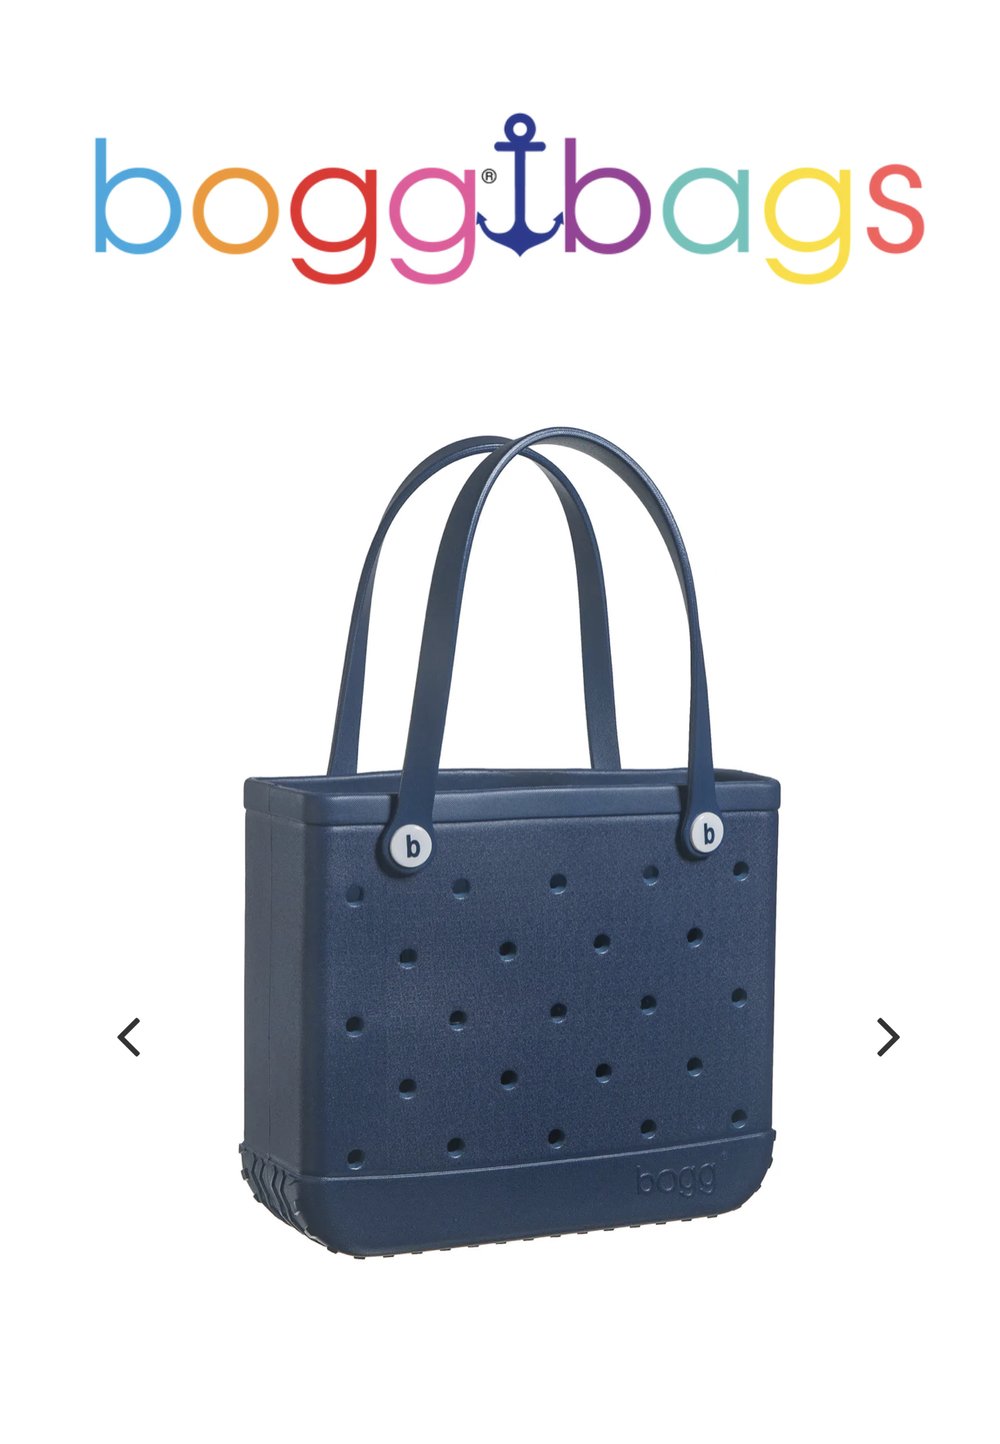 Baby Bogg® Bag